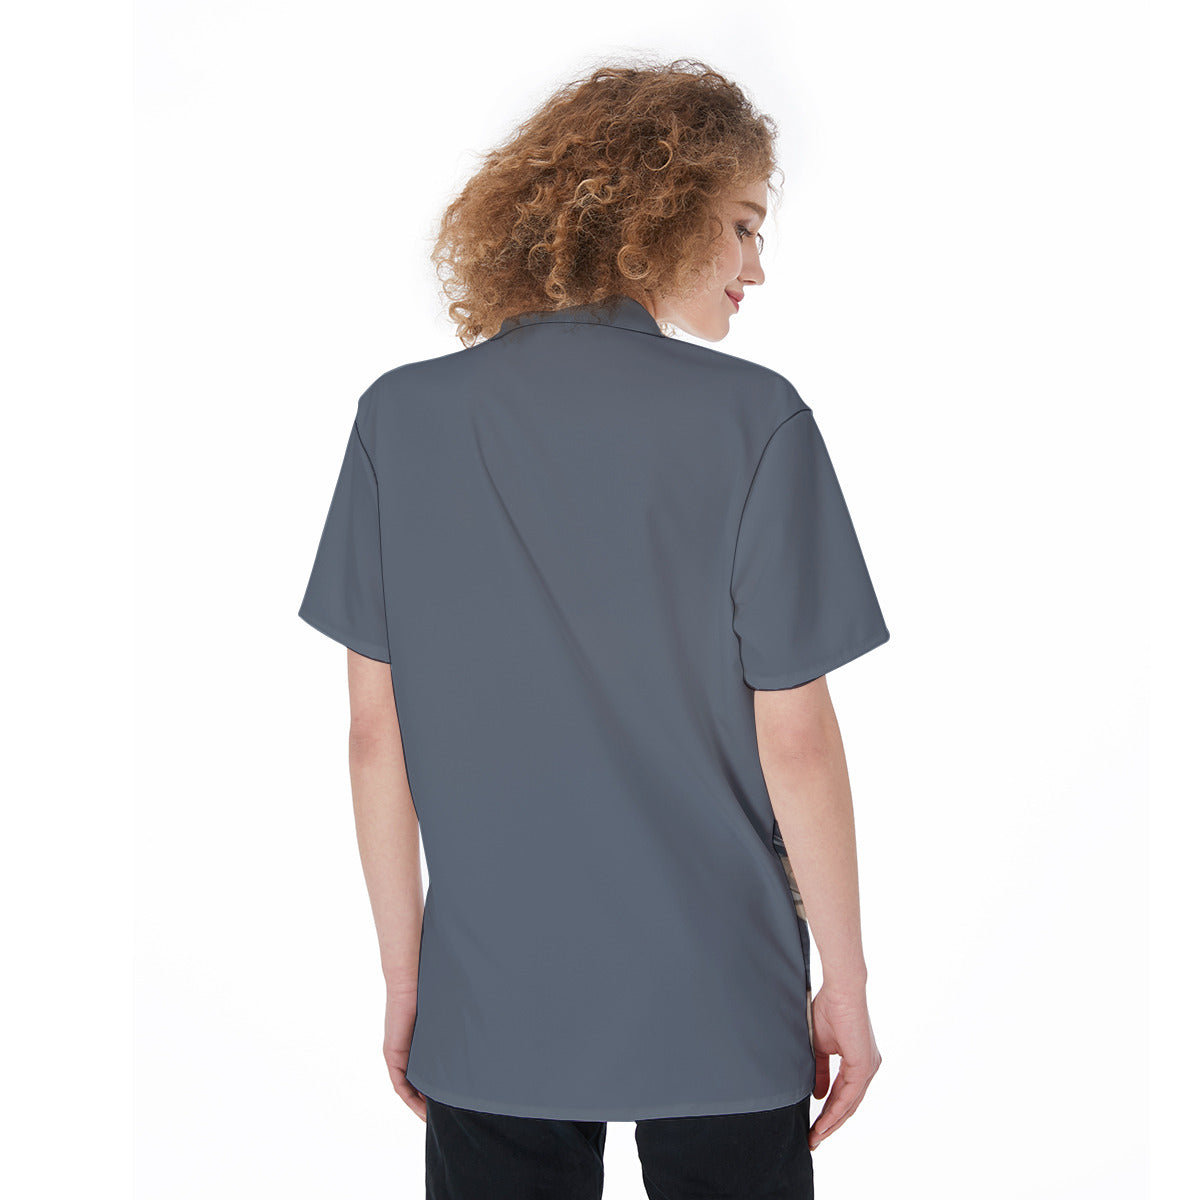 Pattern 198 -- Women's Shirt